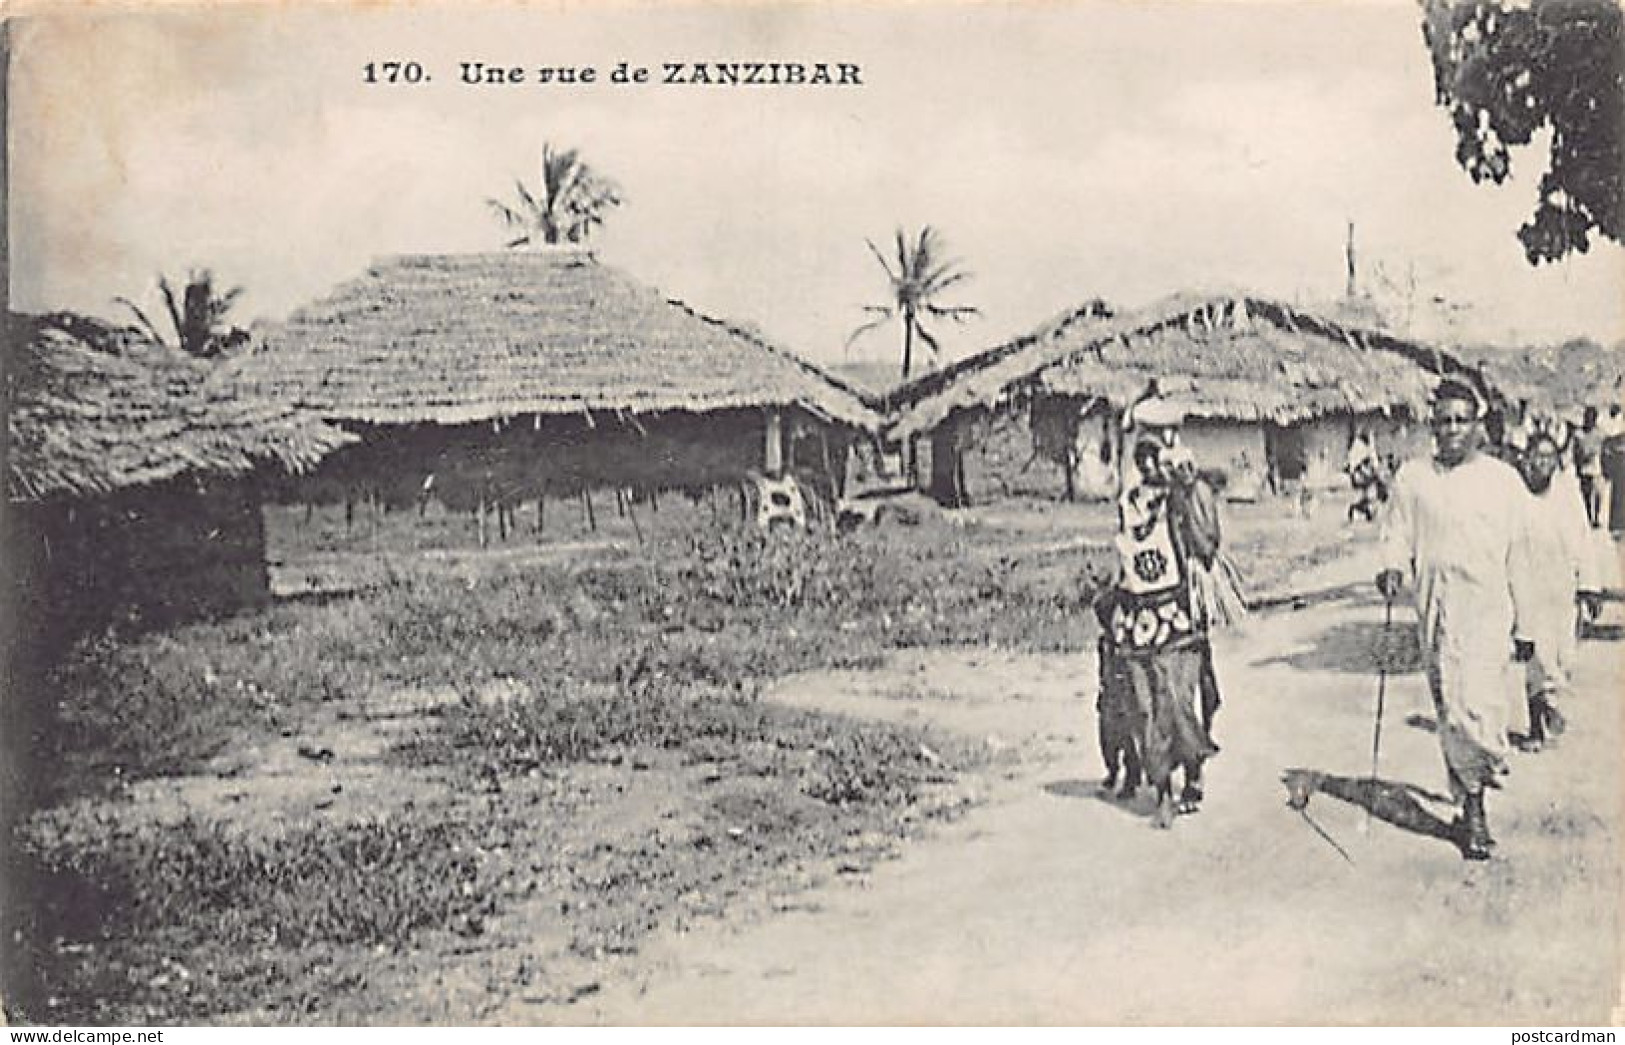 Tanzania - ZANZIBAR - A Street - Publ. Messageries Maritimes 170 - Tansania